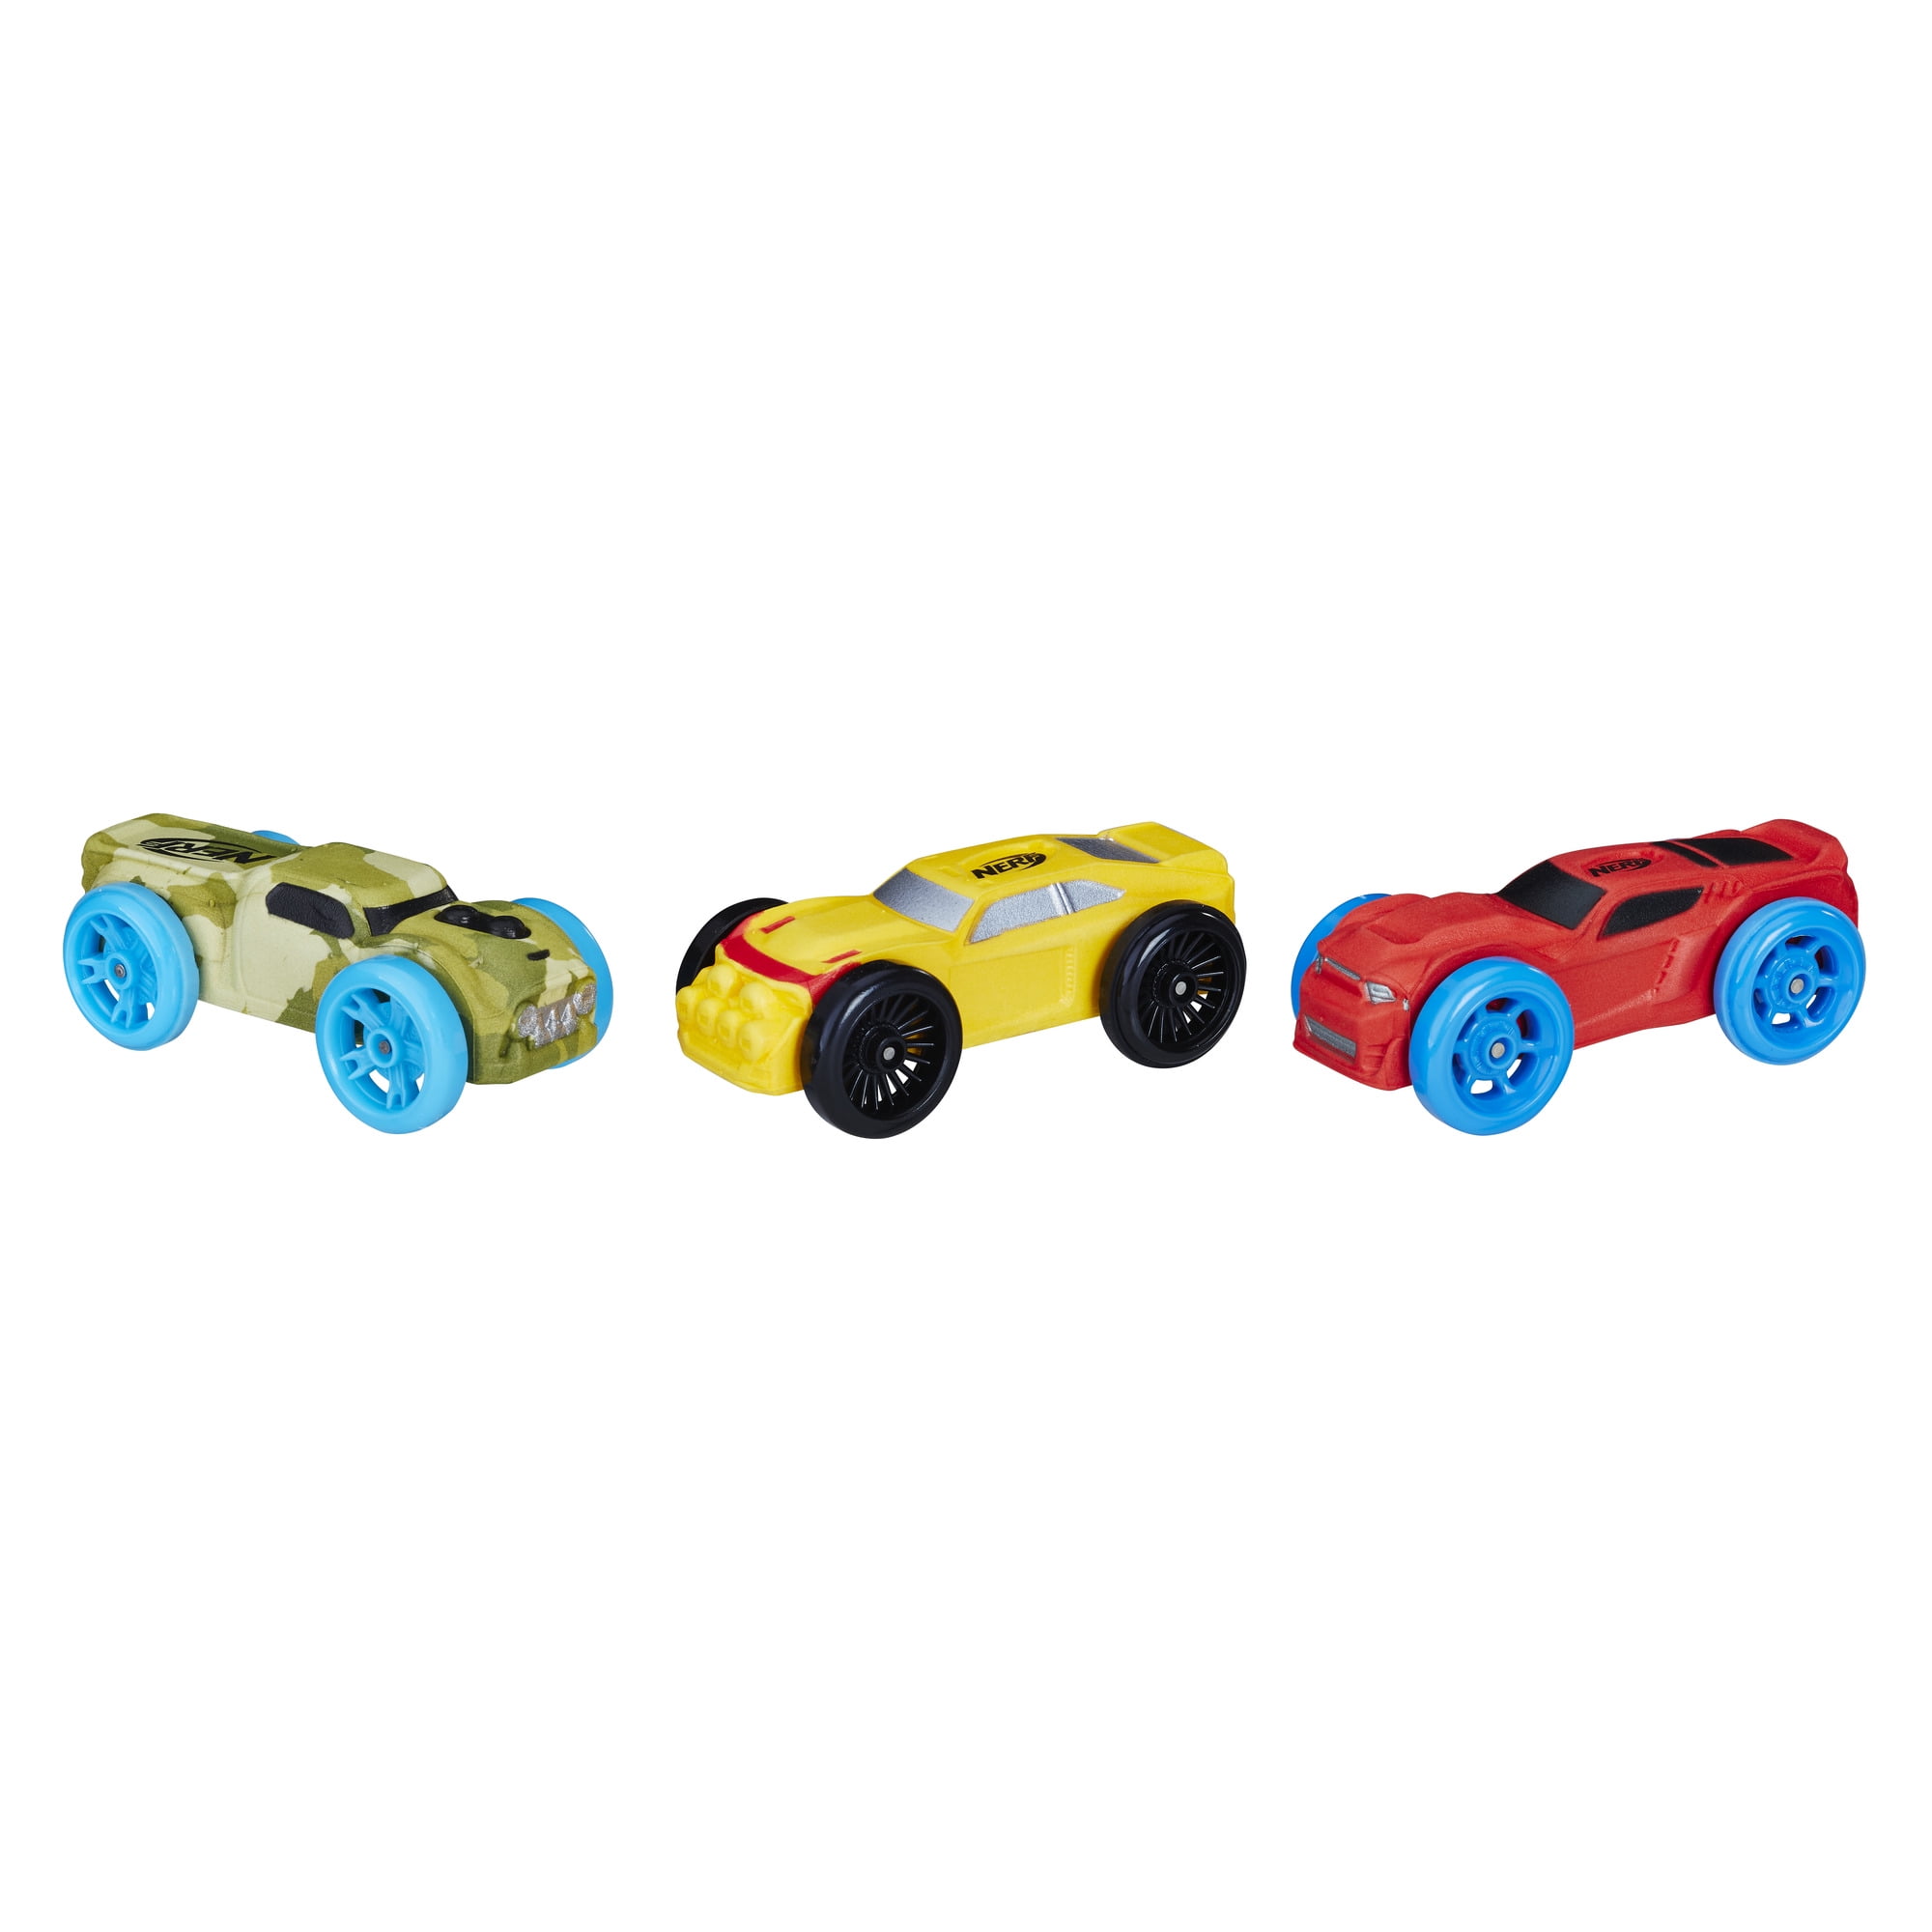 New Perfect Gift For Kids Nerf Nitro Foam Cars 2 Mini Cars In One Pack 